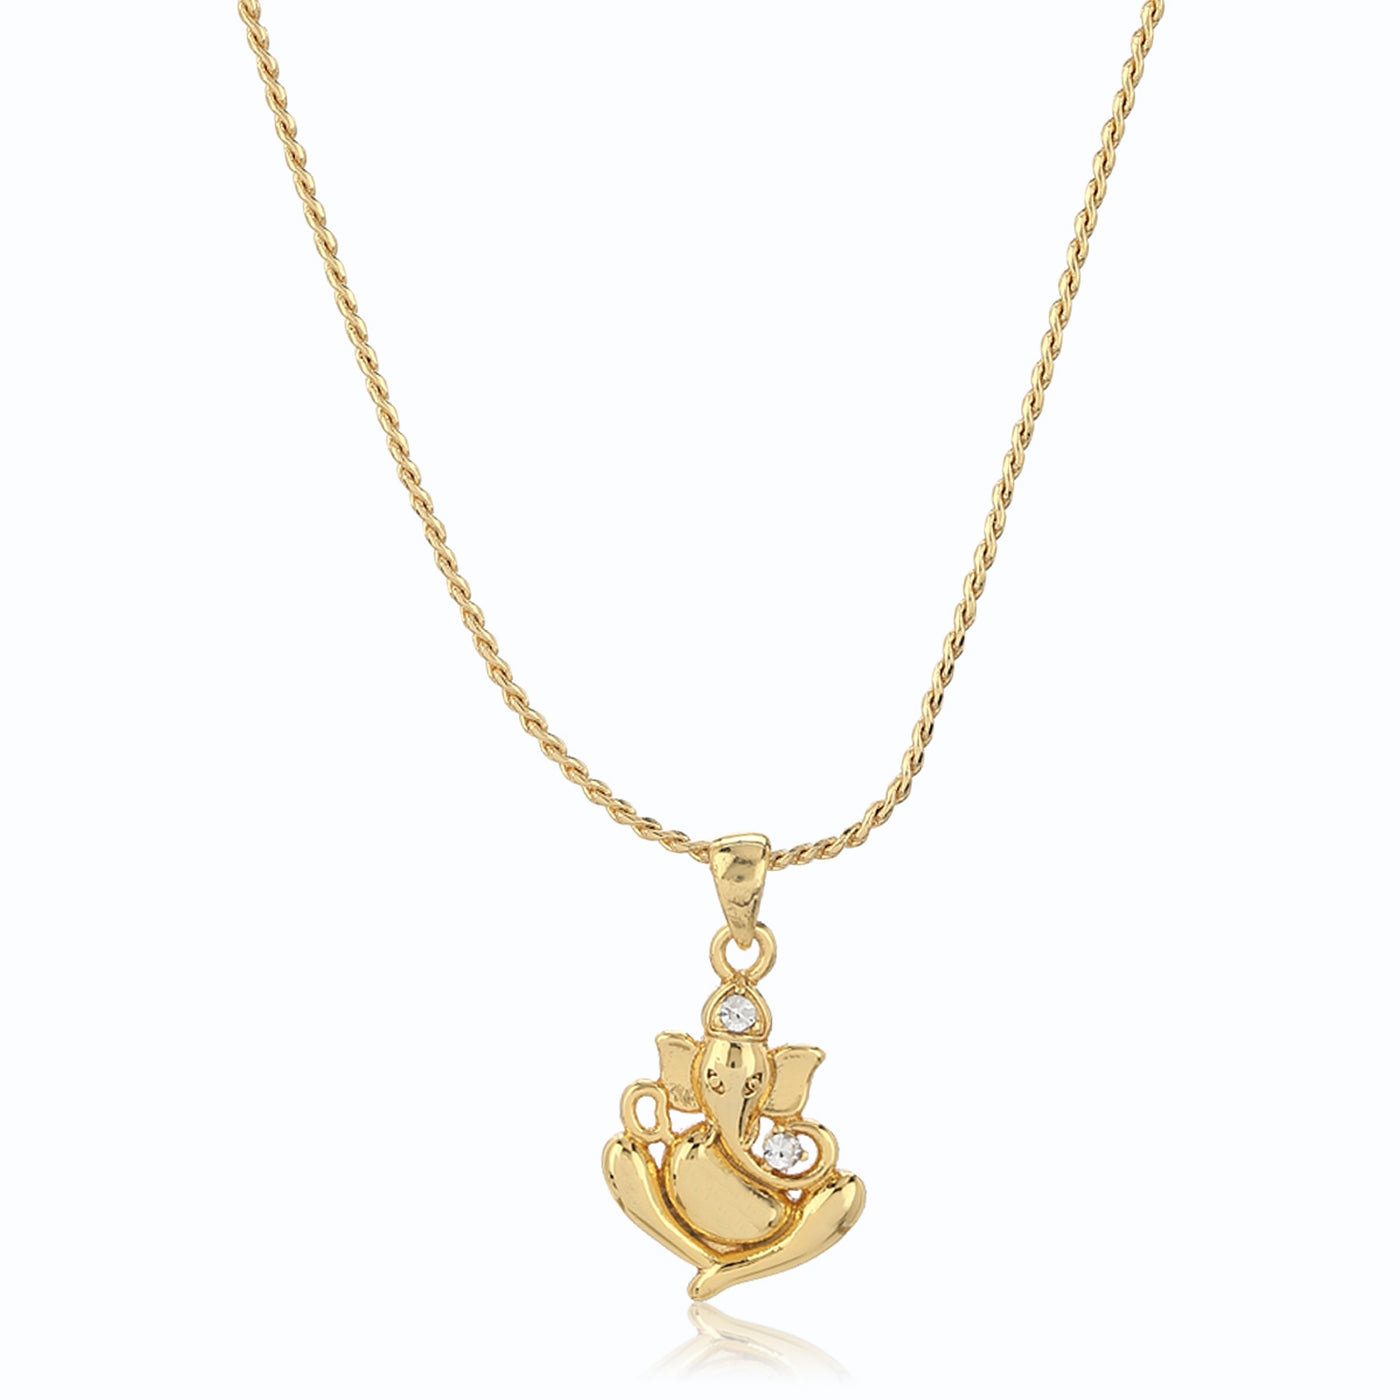 Gold Tone Plated Ganesh Pendant chain